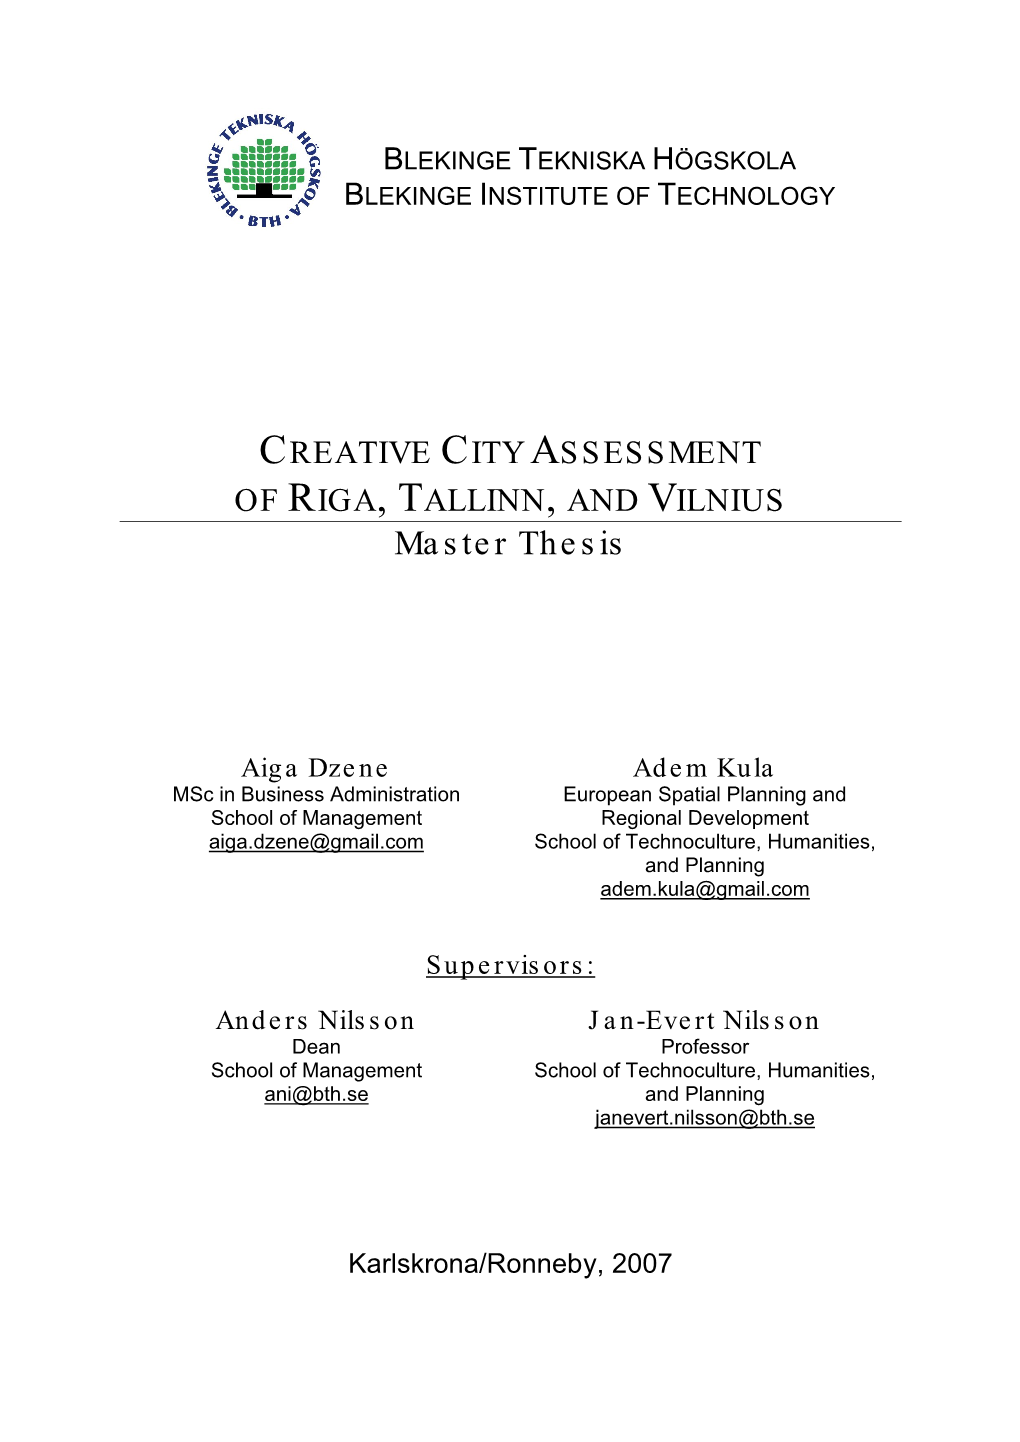 Creative City Assessment of Riga, Tallinn, and Vilnius